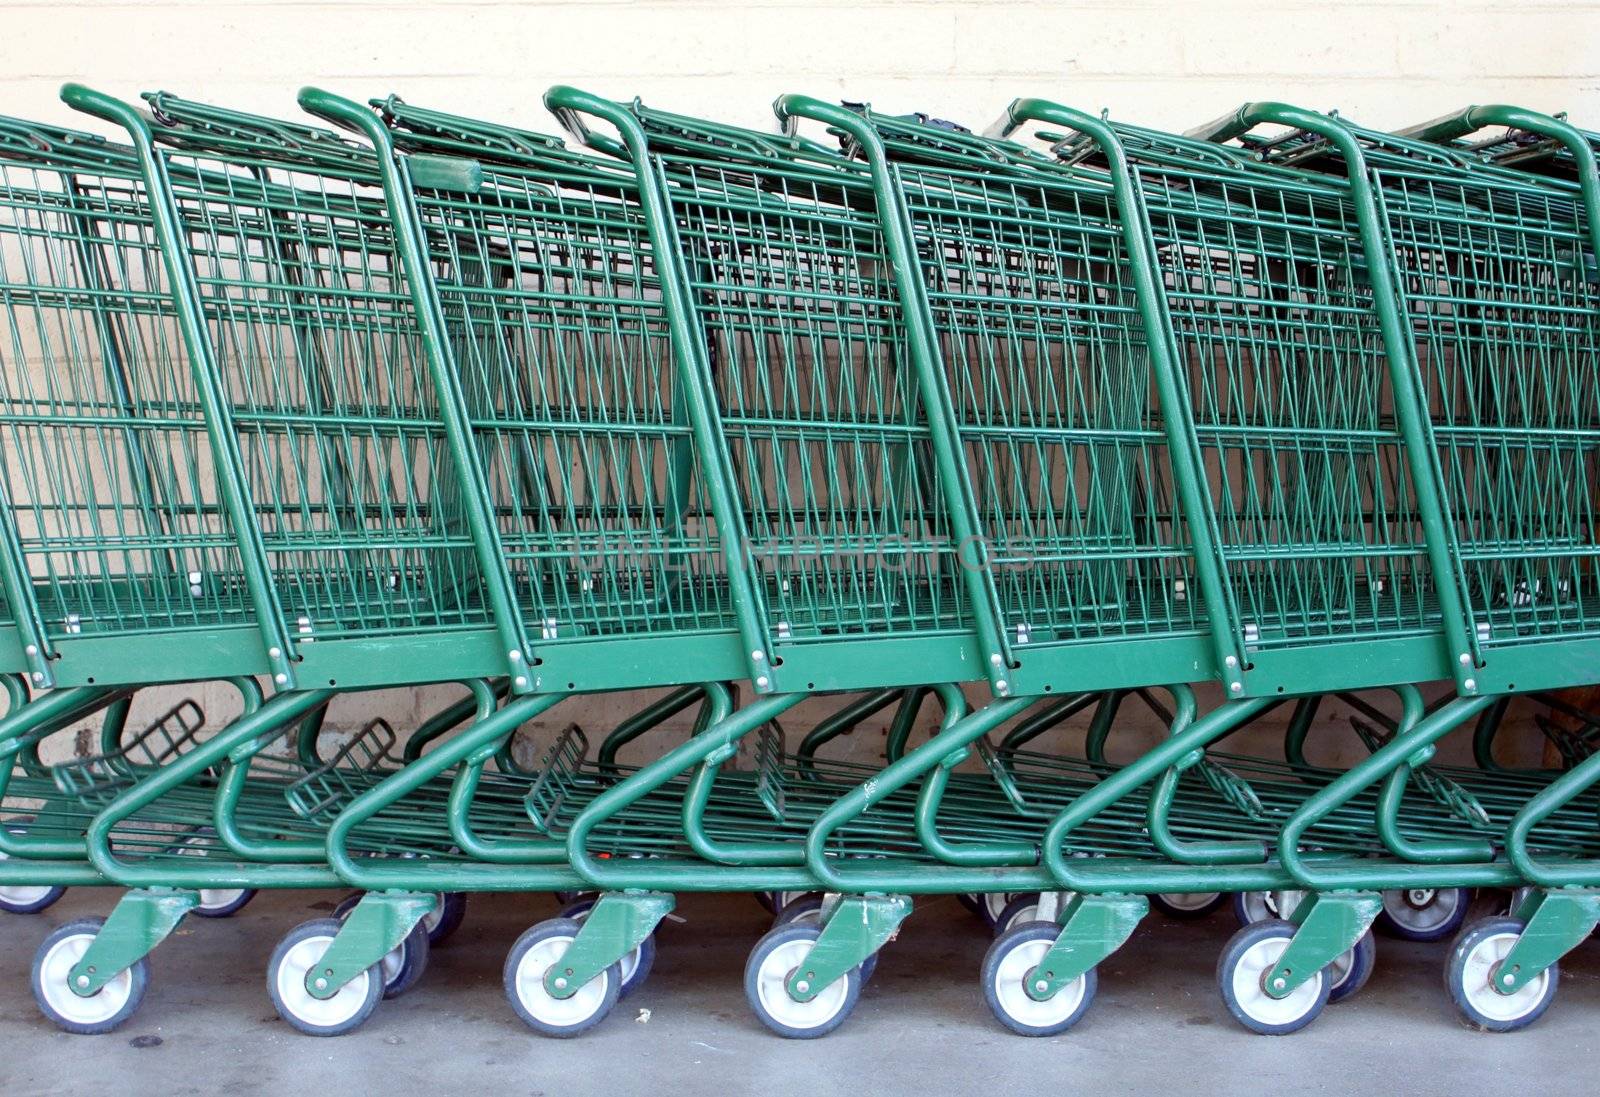 Shopping Carts by hlehnerer